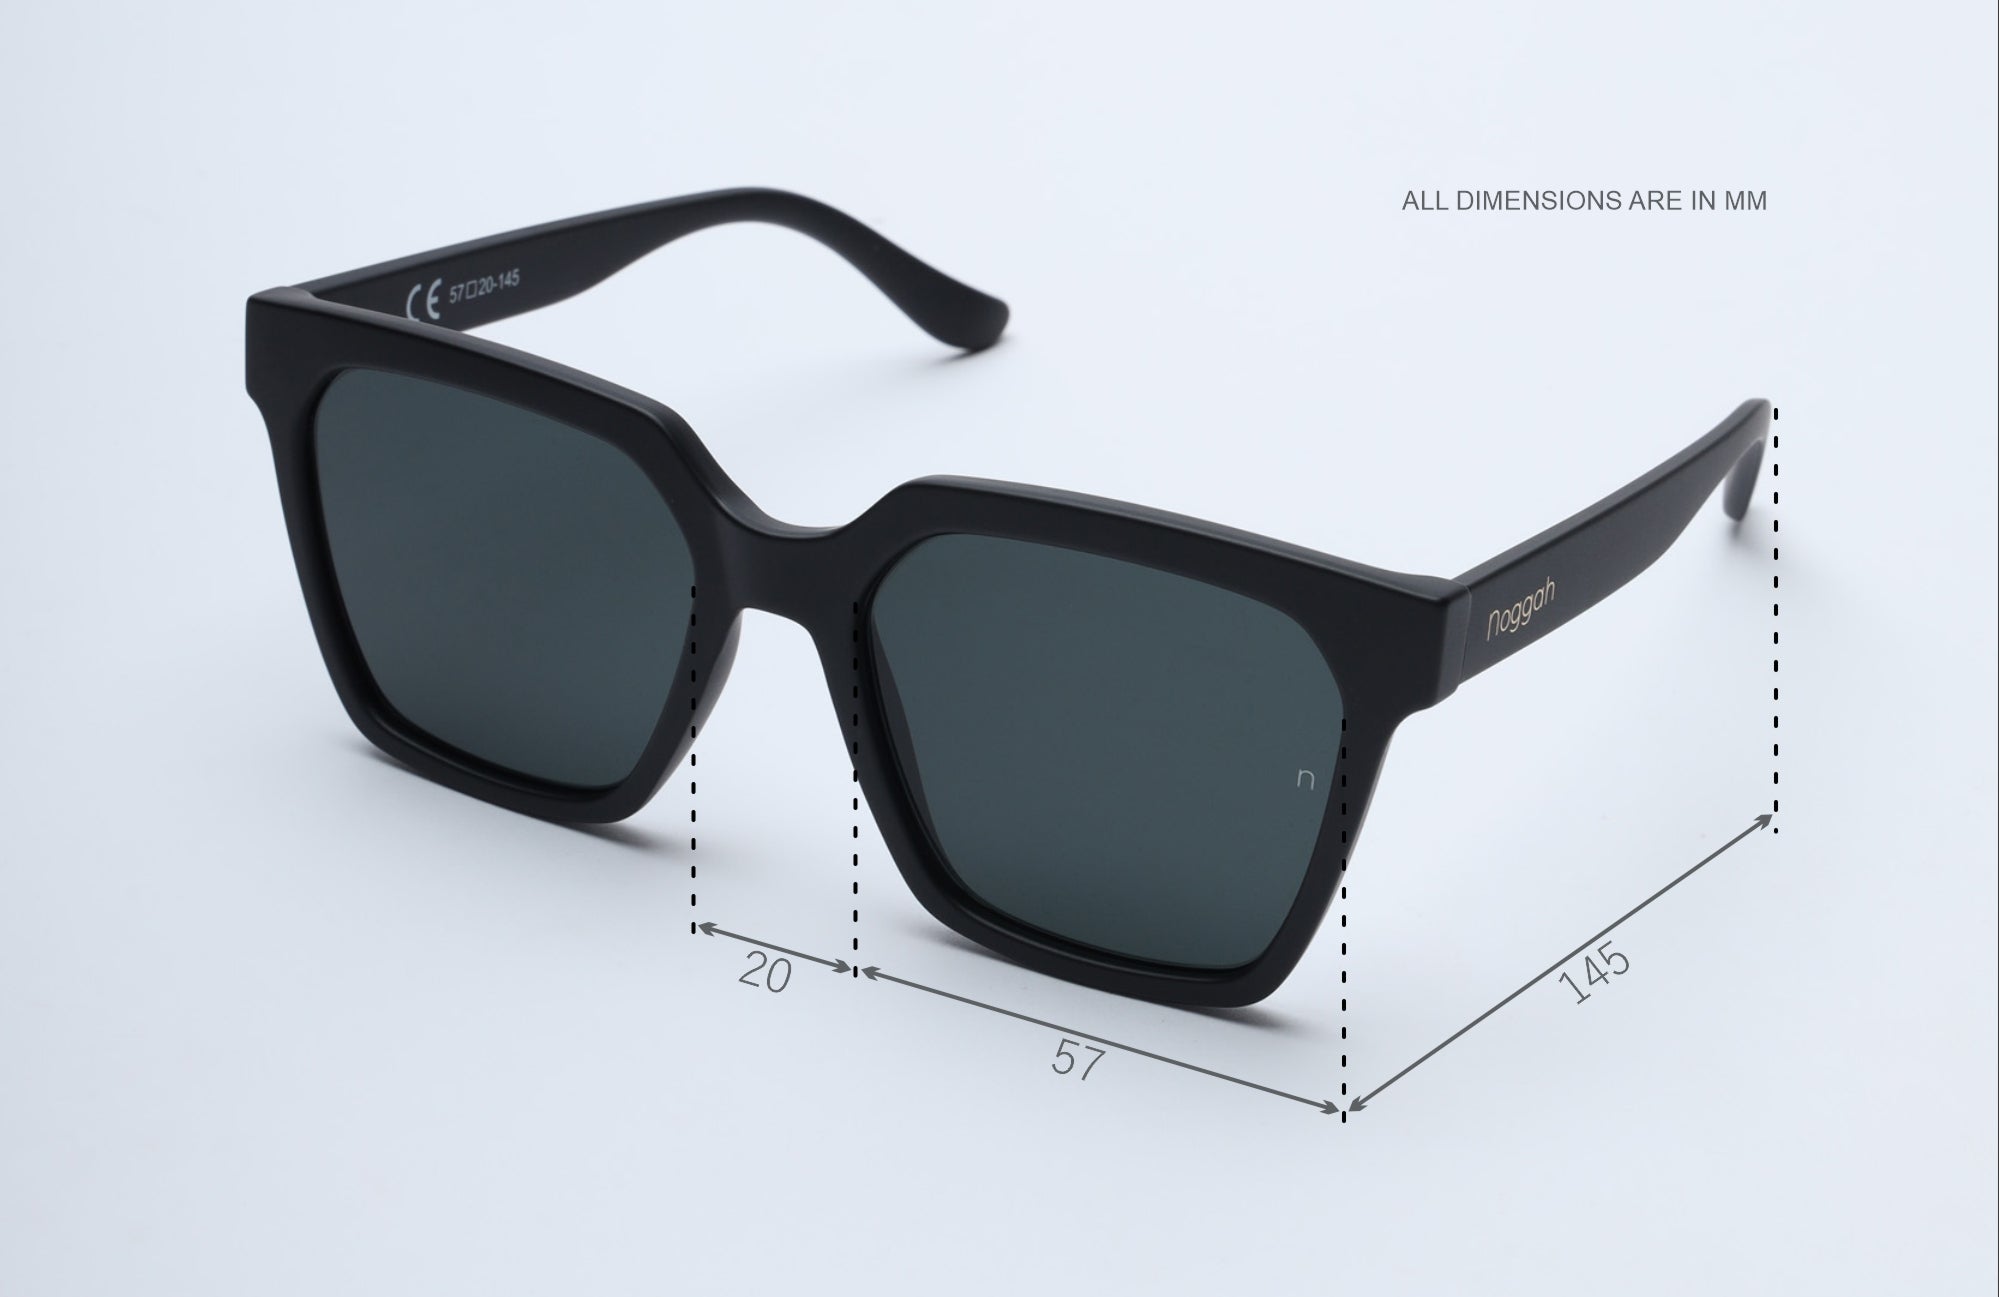 NS1004BFBL PC Black Square Frame with Black Glass Lens Sunglasses